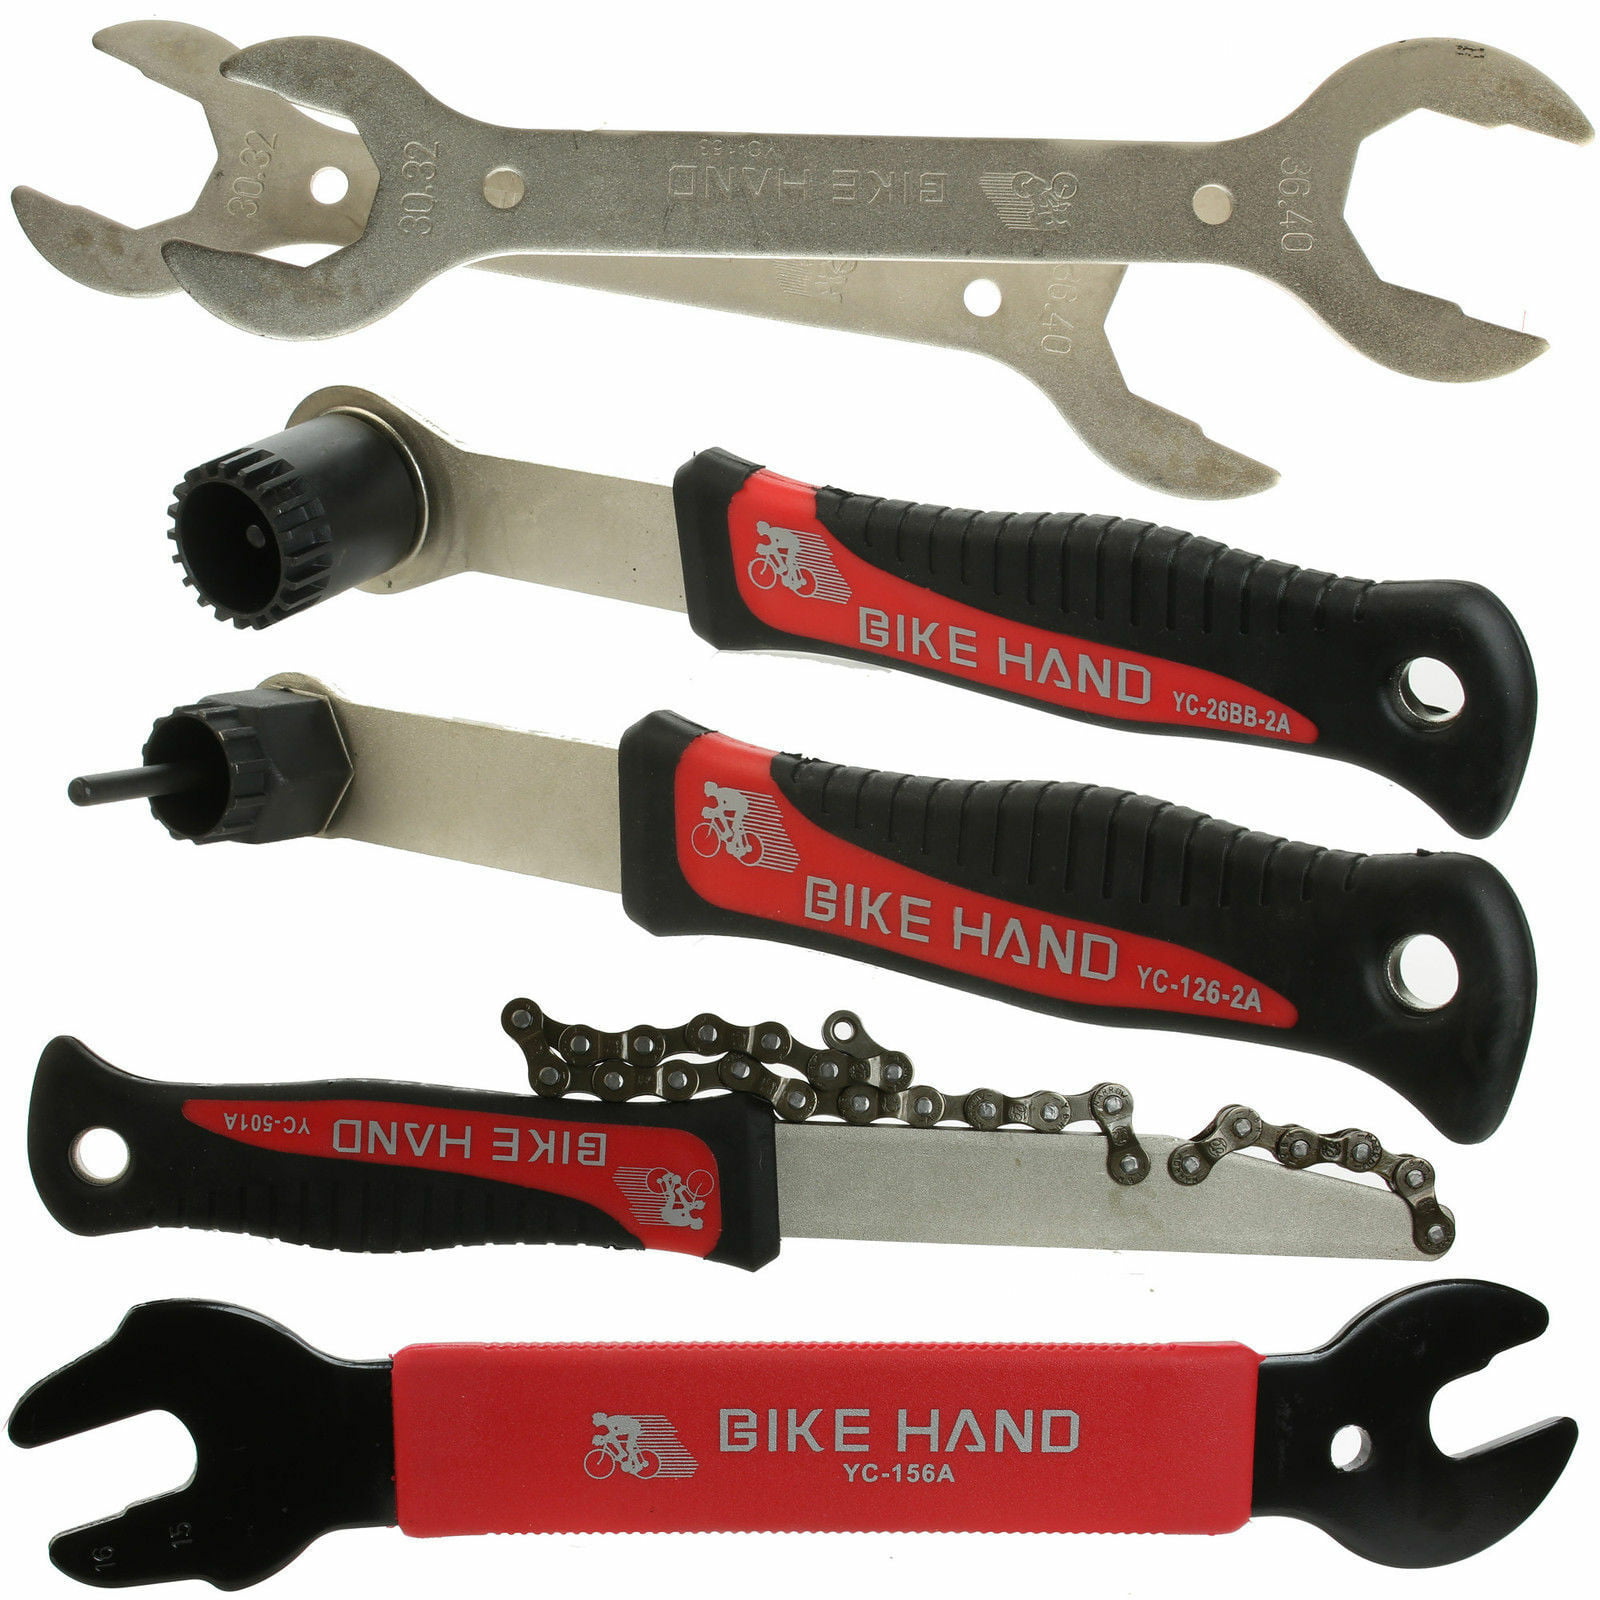 Bike Bicycle Repair Maintenance Tool Kit 18pcs Wrench Spaner BIKEHAND YC-728